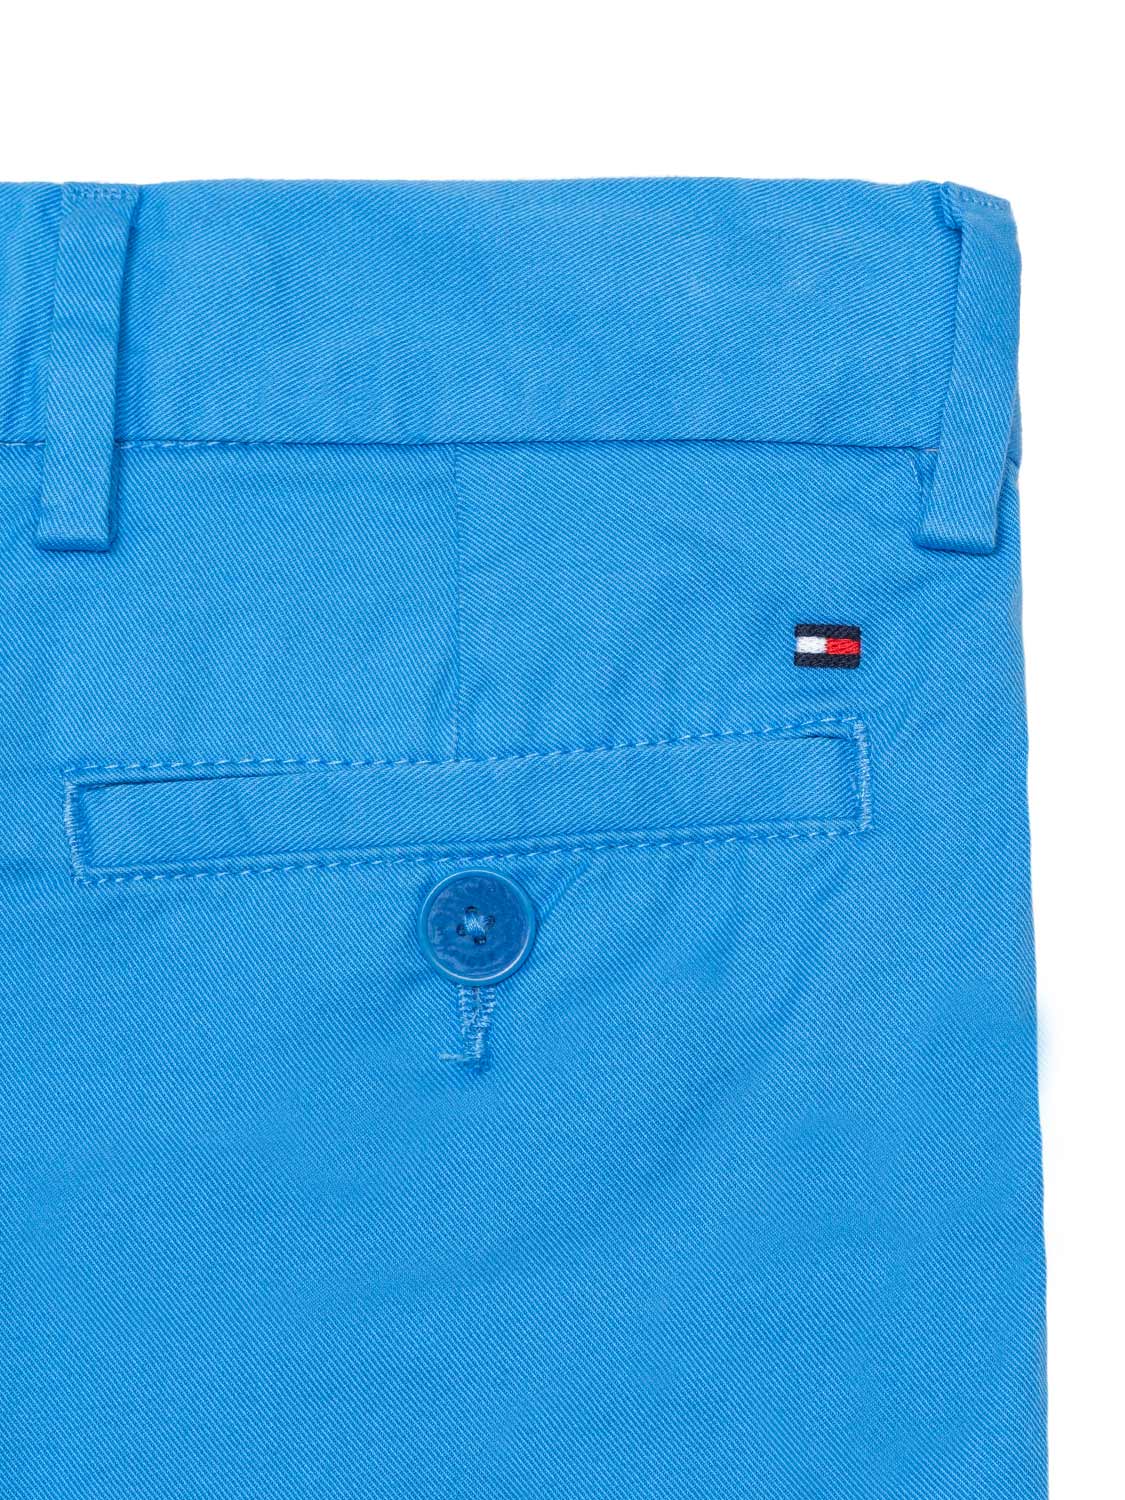 Essential 1985 Chino Shorts - Breezy Blue